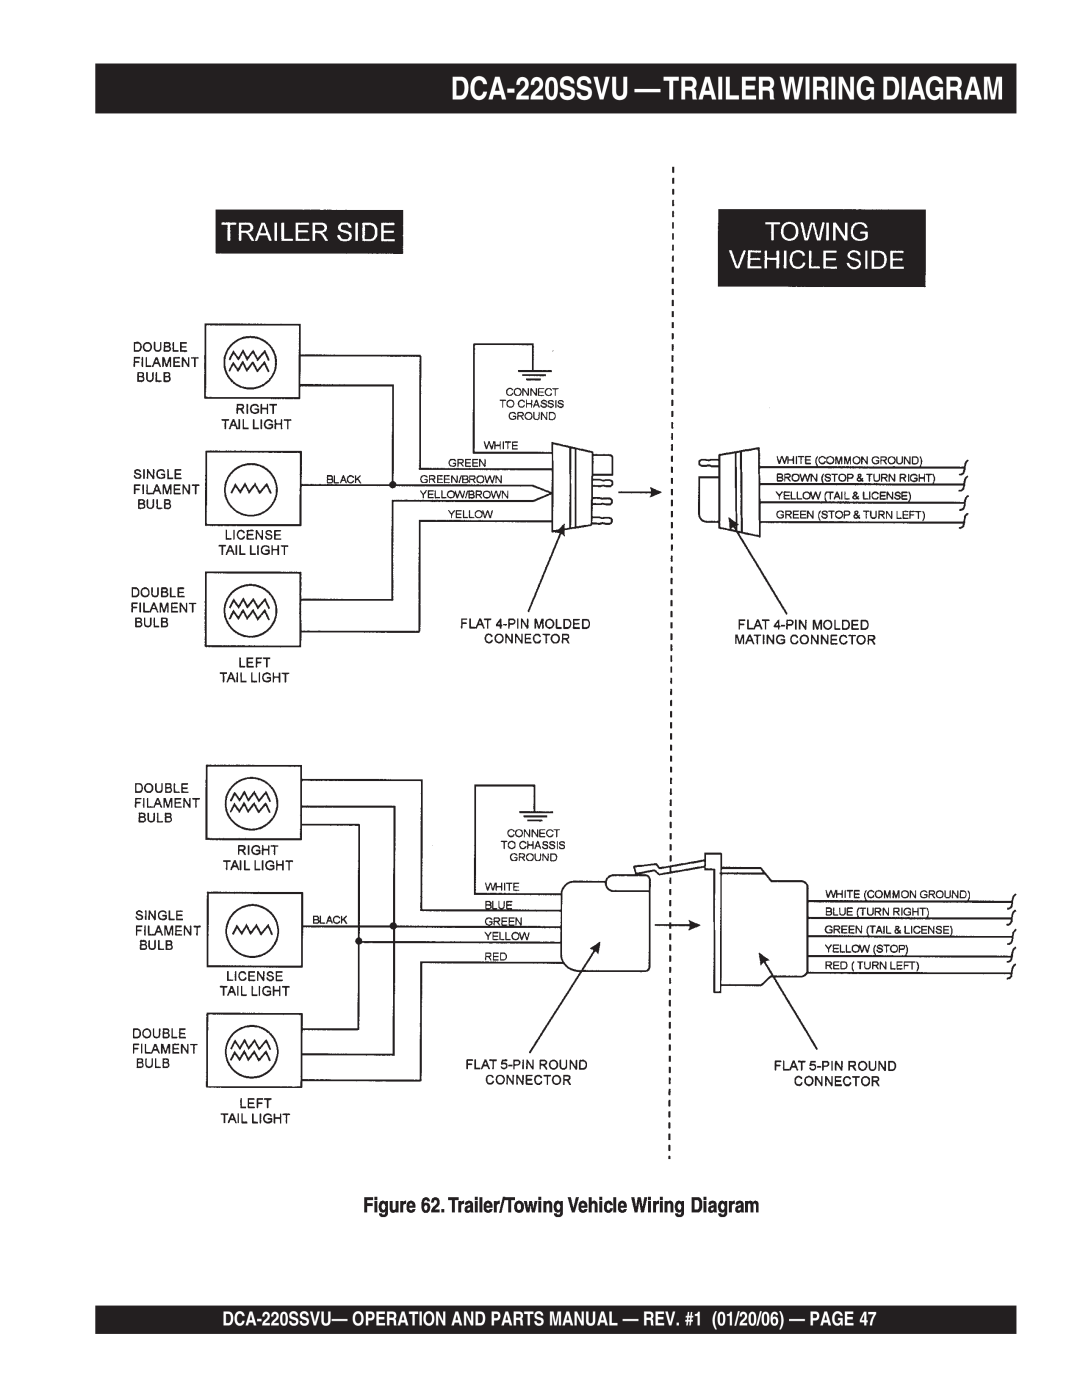 Multiquip operation manual DCA-220SSVU —TRAILERWIRINGDIAGRAM, Trailer/Towing Vehicle Wiring Diagram 